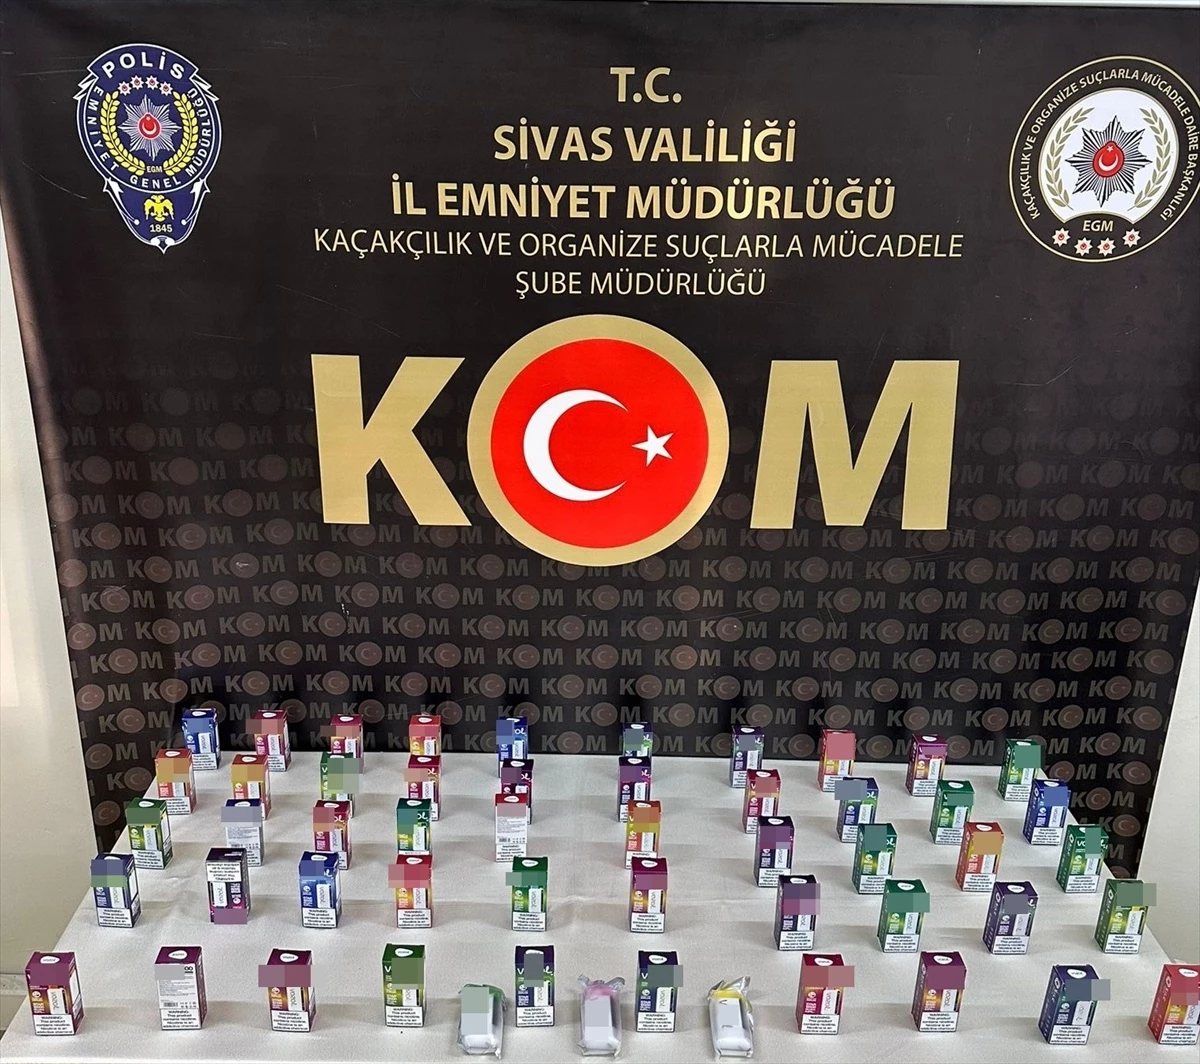 Sivas\'ta 53 Kaçak Elektronik Sigara Ele Geçirildi